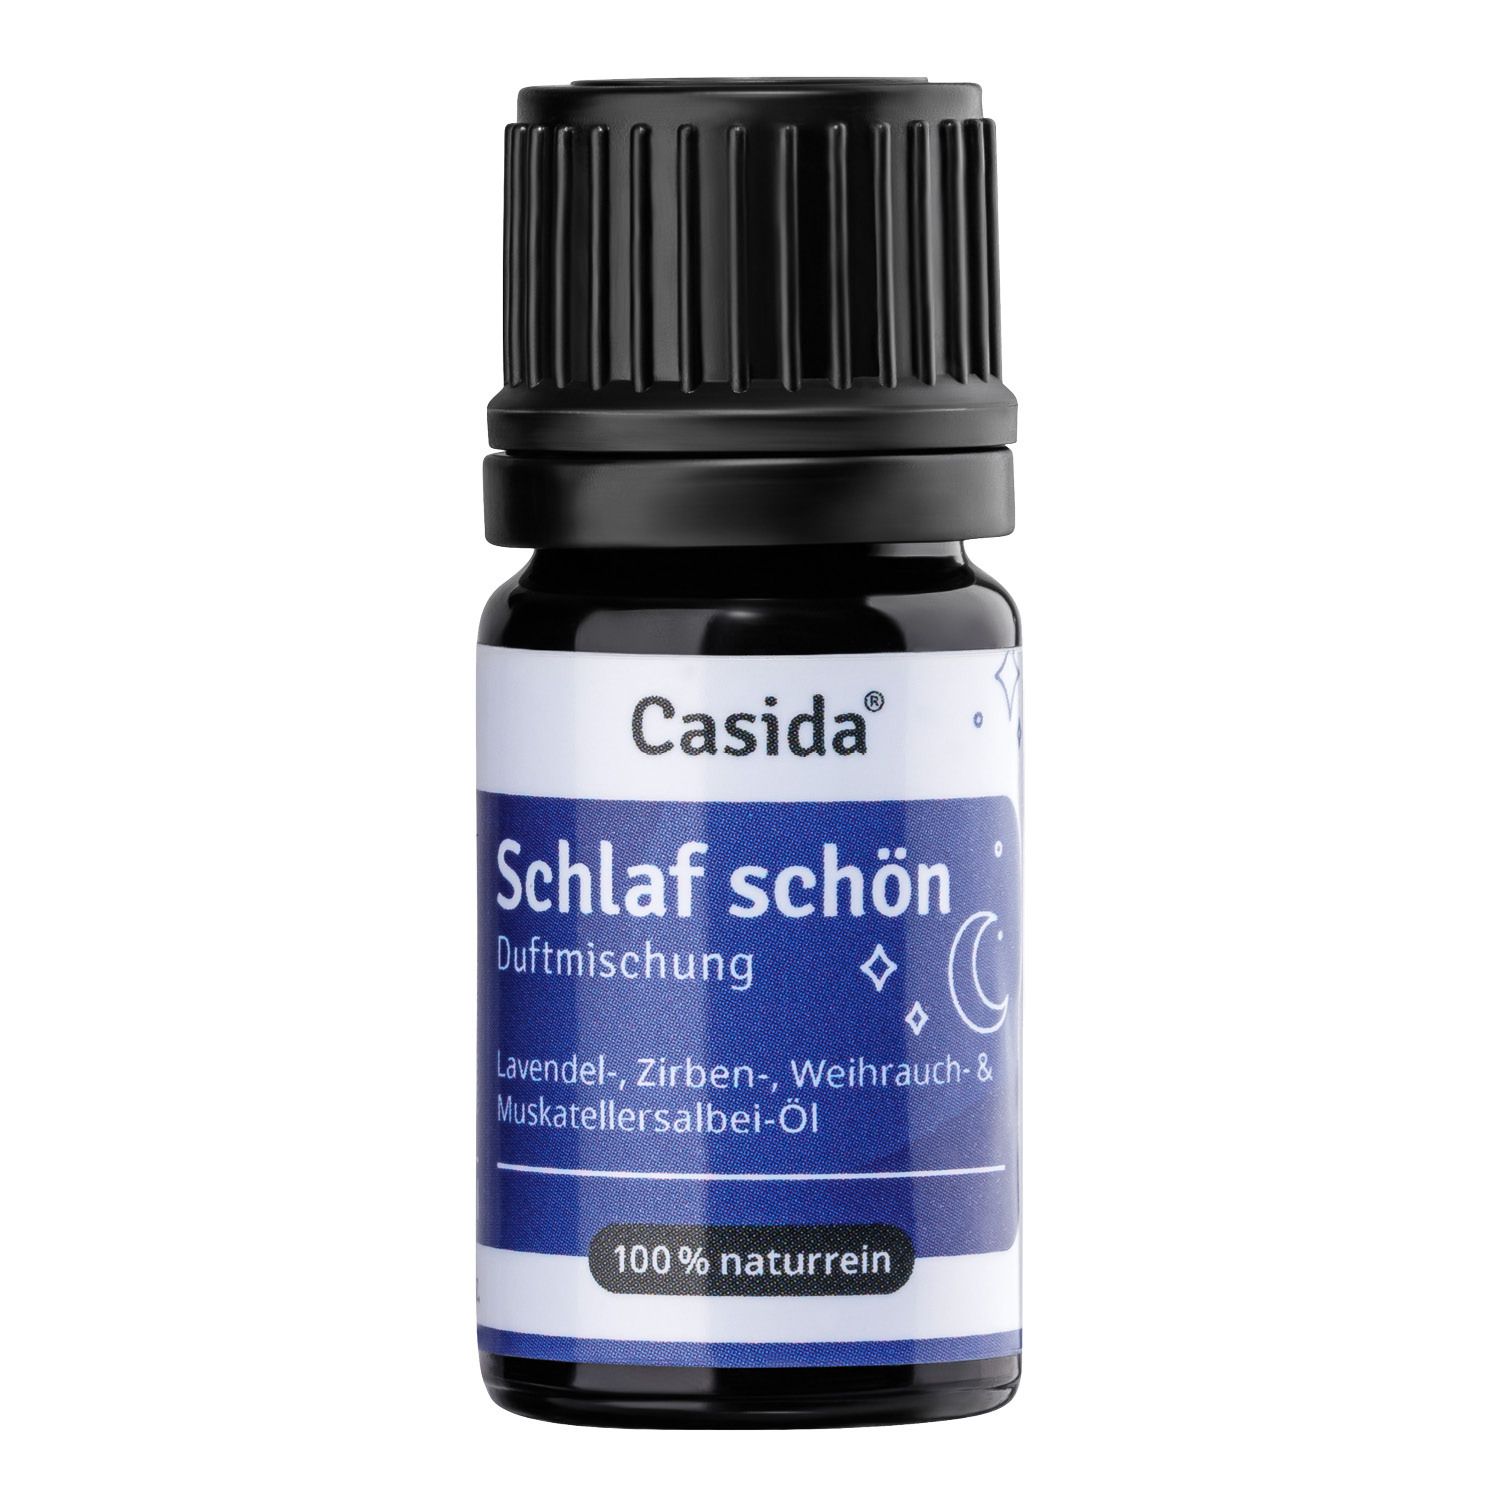 Image of Casida® Schlaf schön Duftmischung